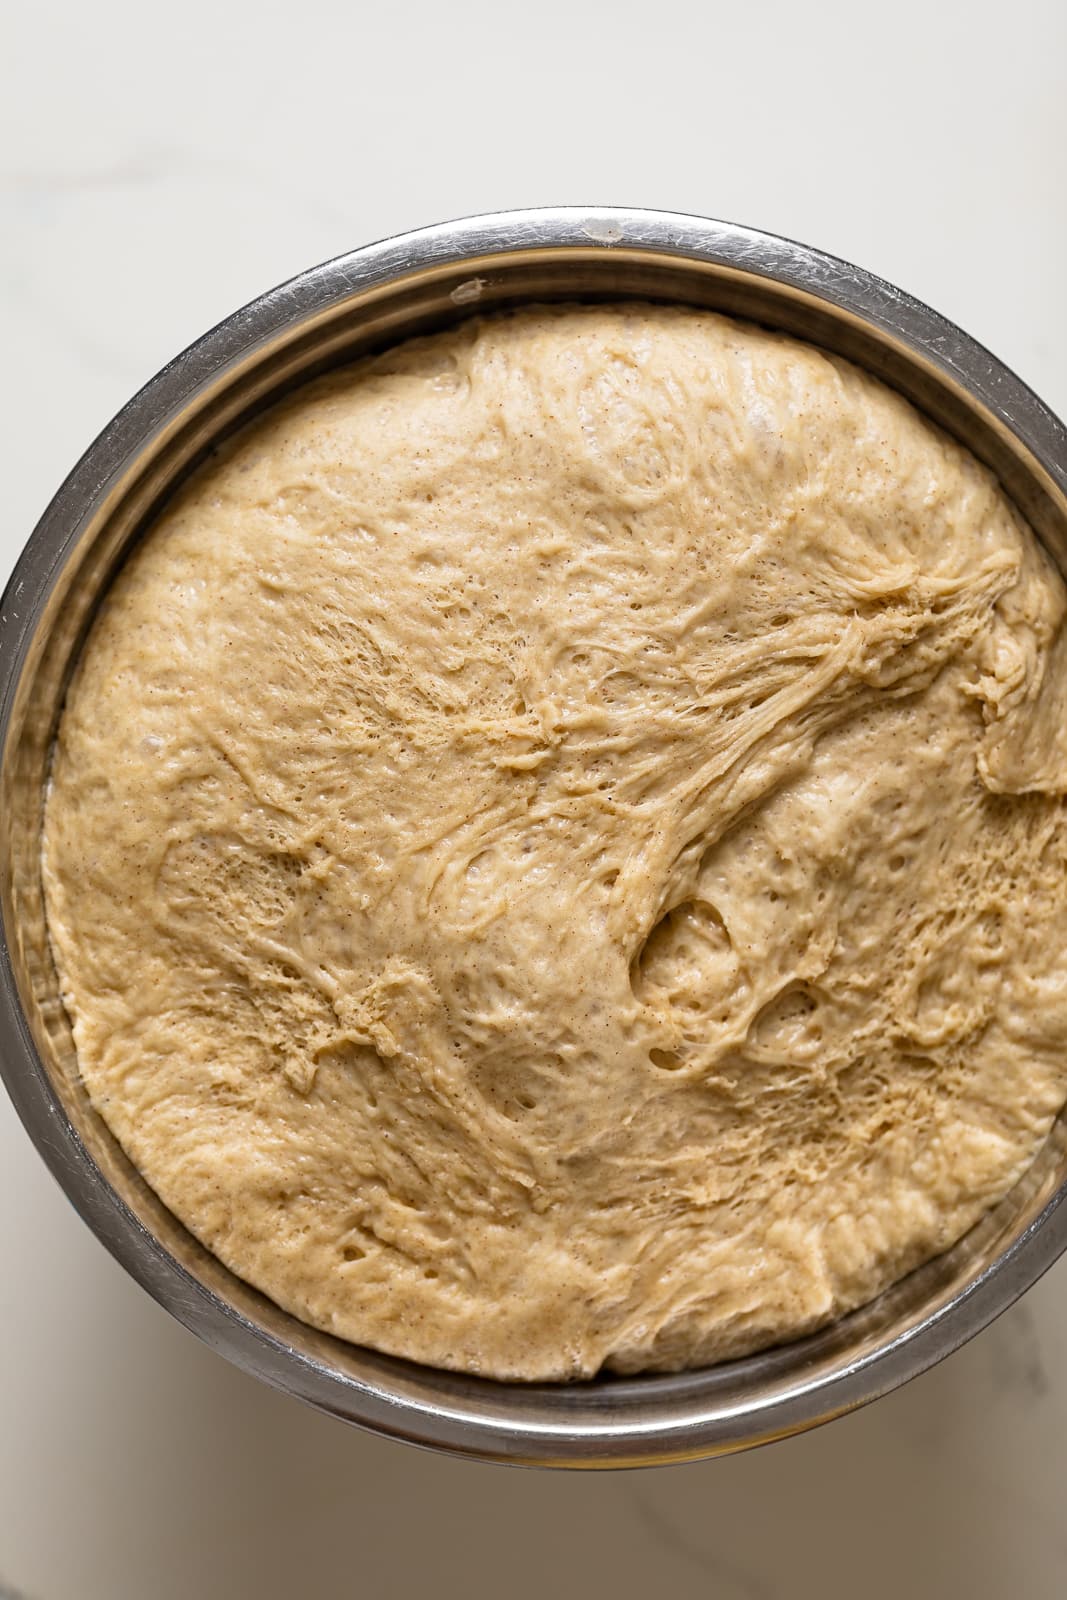 Bowl of risen Vegan Apple Cinnamon Pull-Apart Bread dough